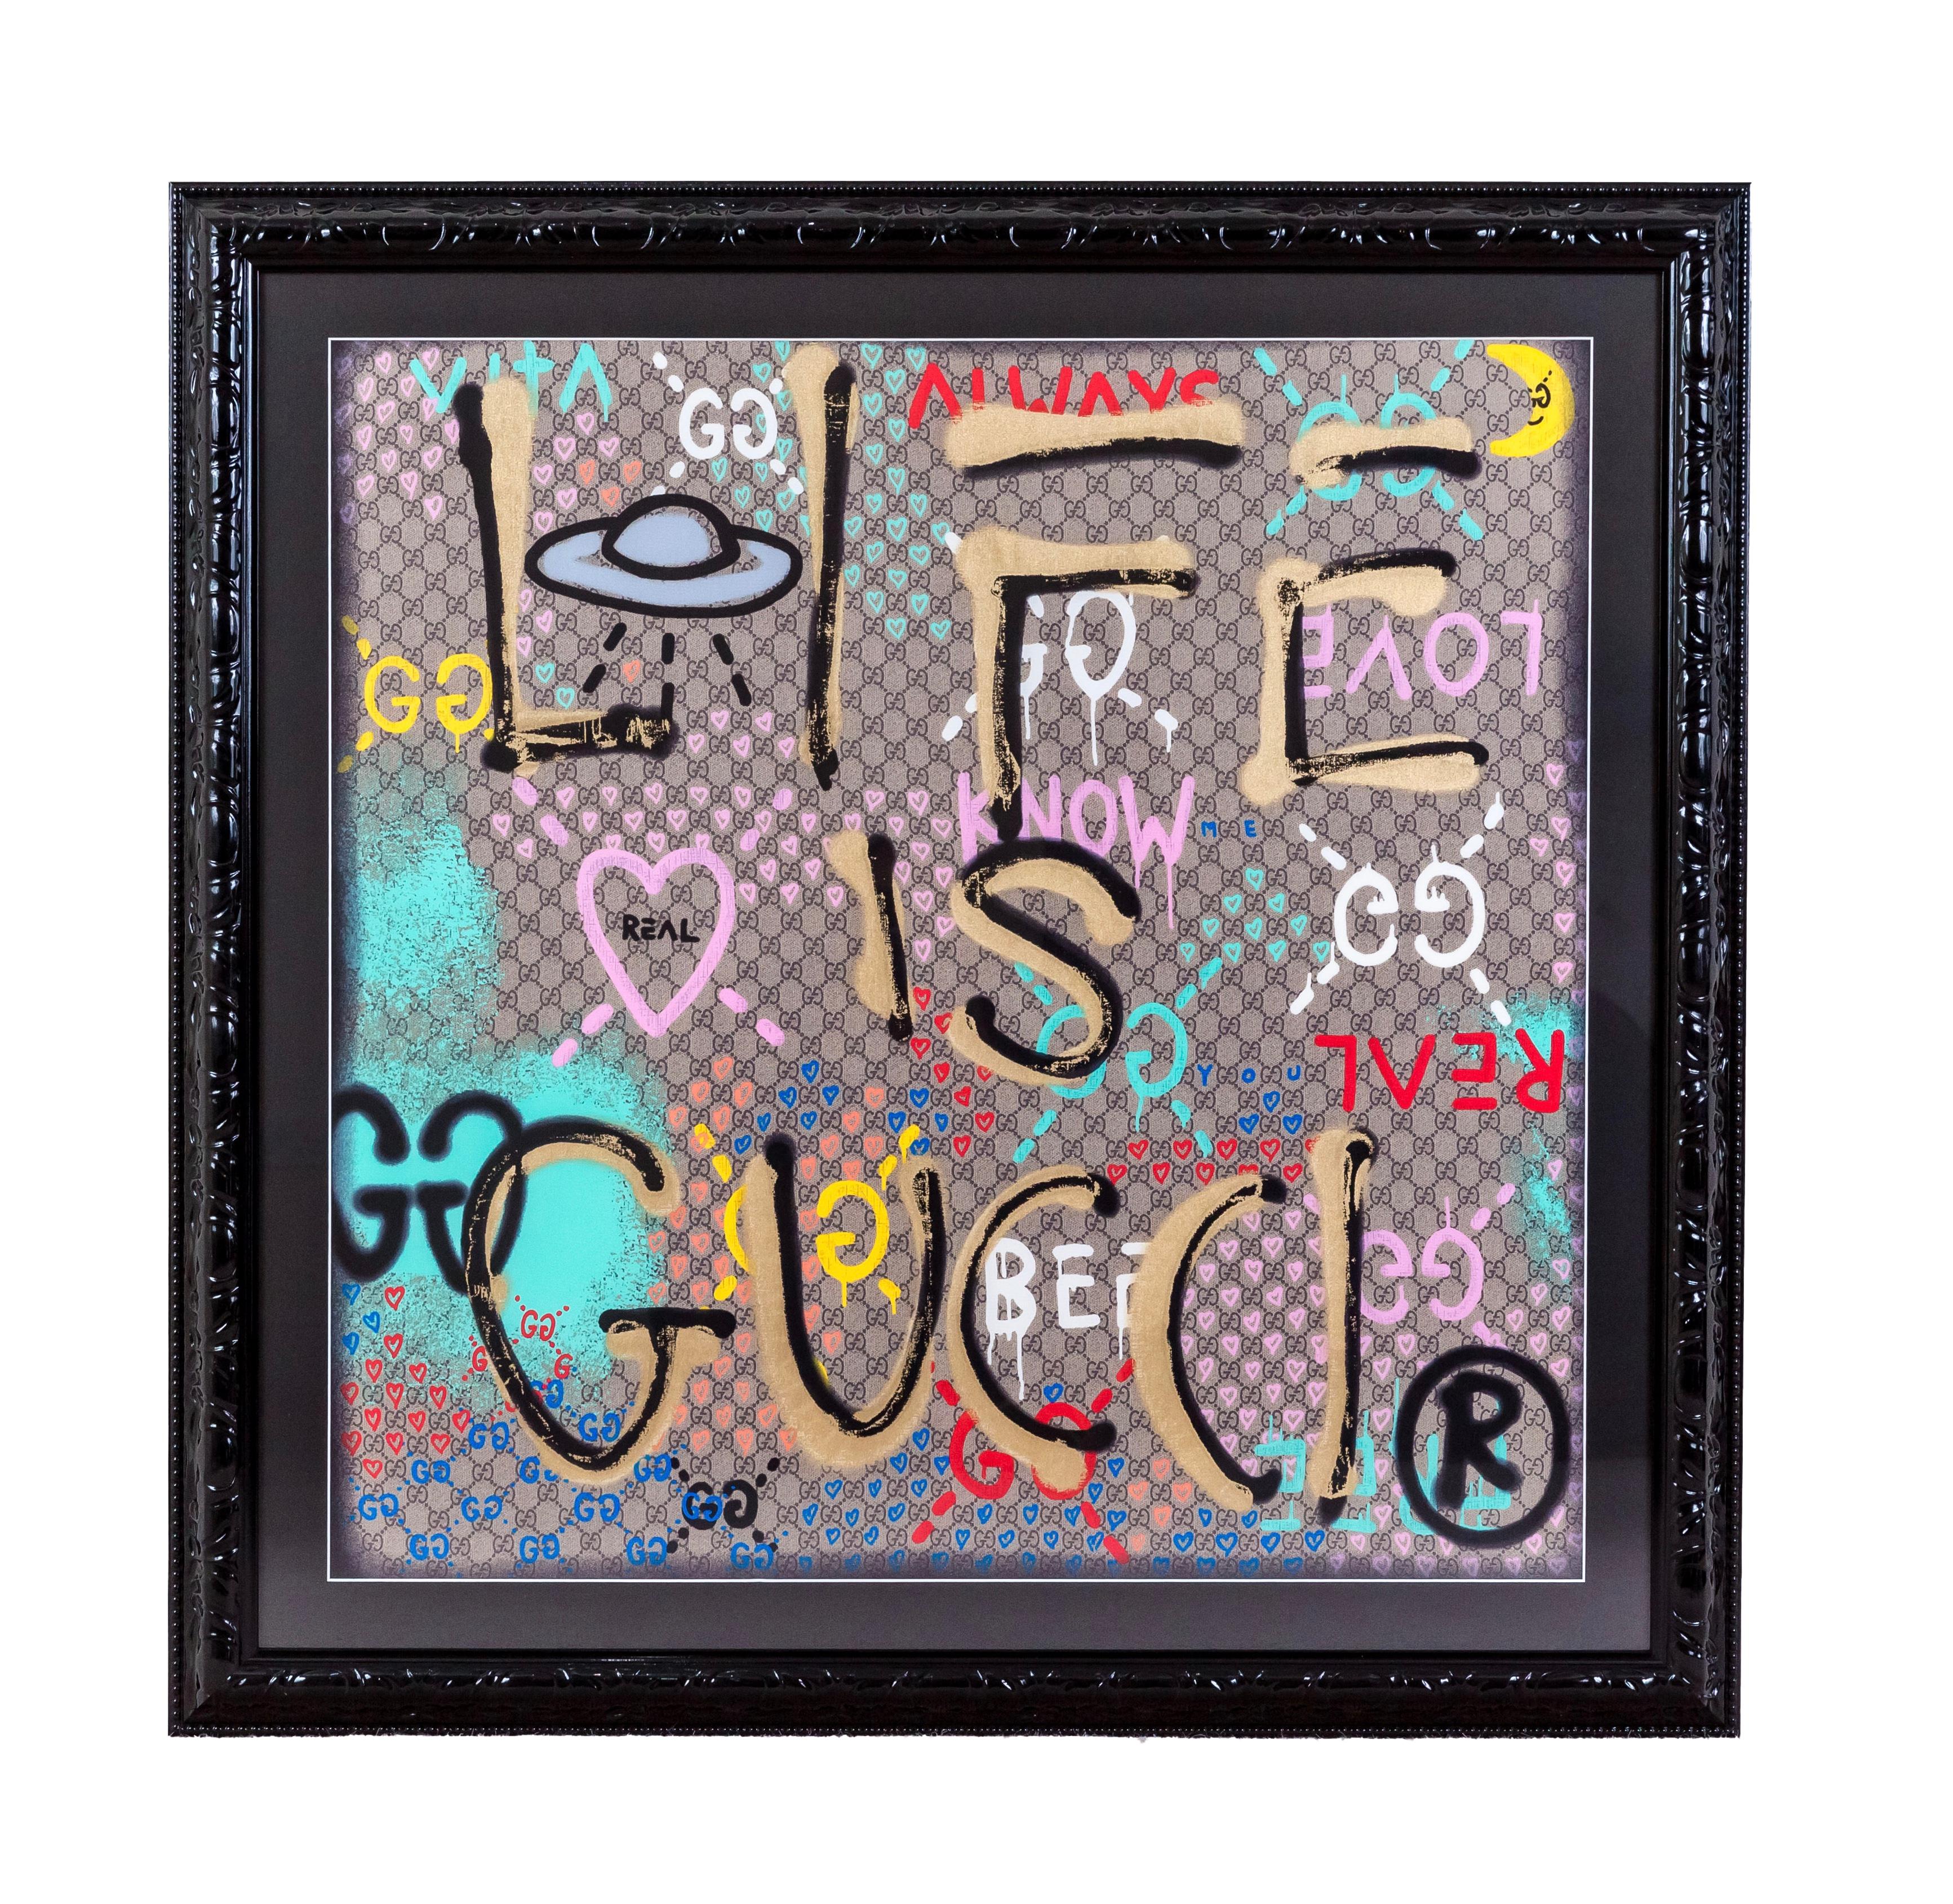 GUCCI - Life is Gucci - Logo - graffiti art - street art - gucci logo - abstract - Mixed Media Art by Unknown